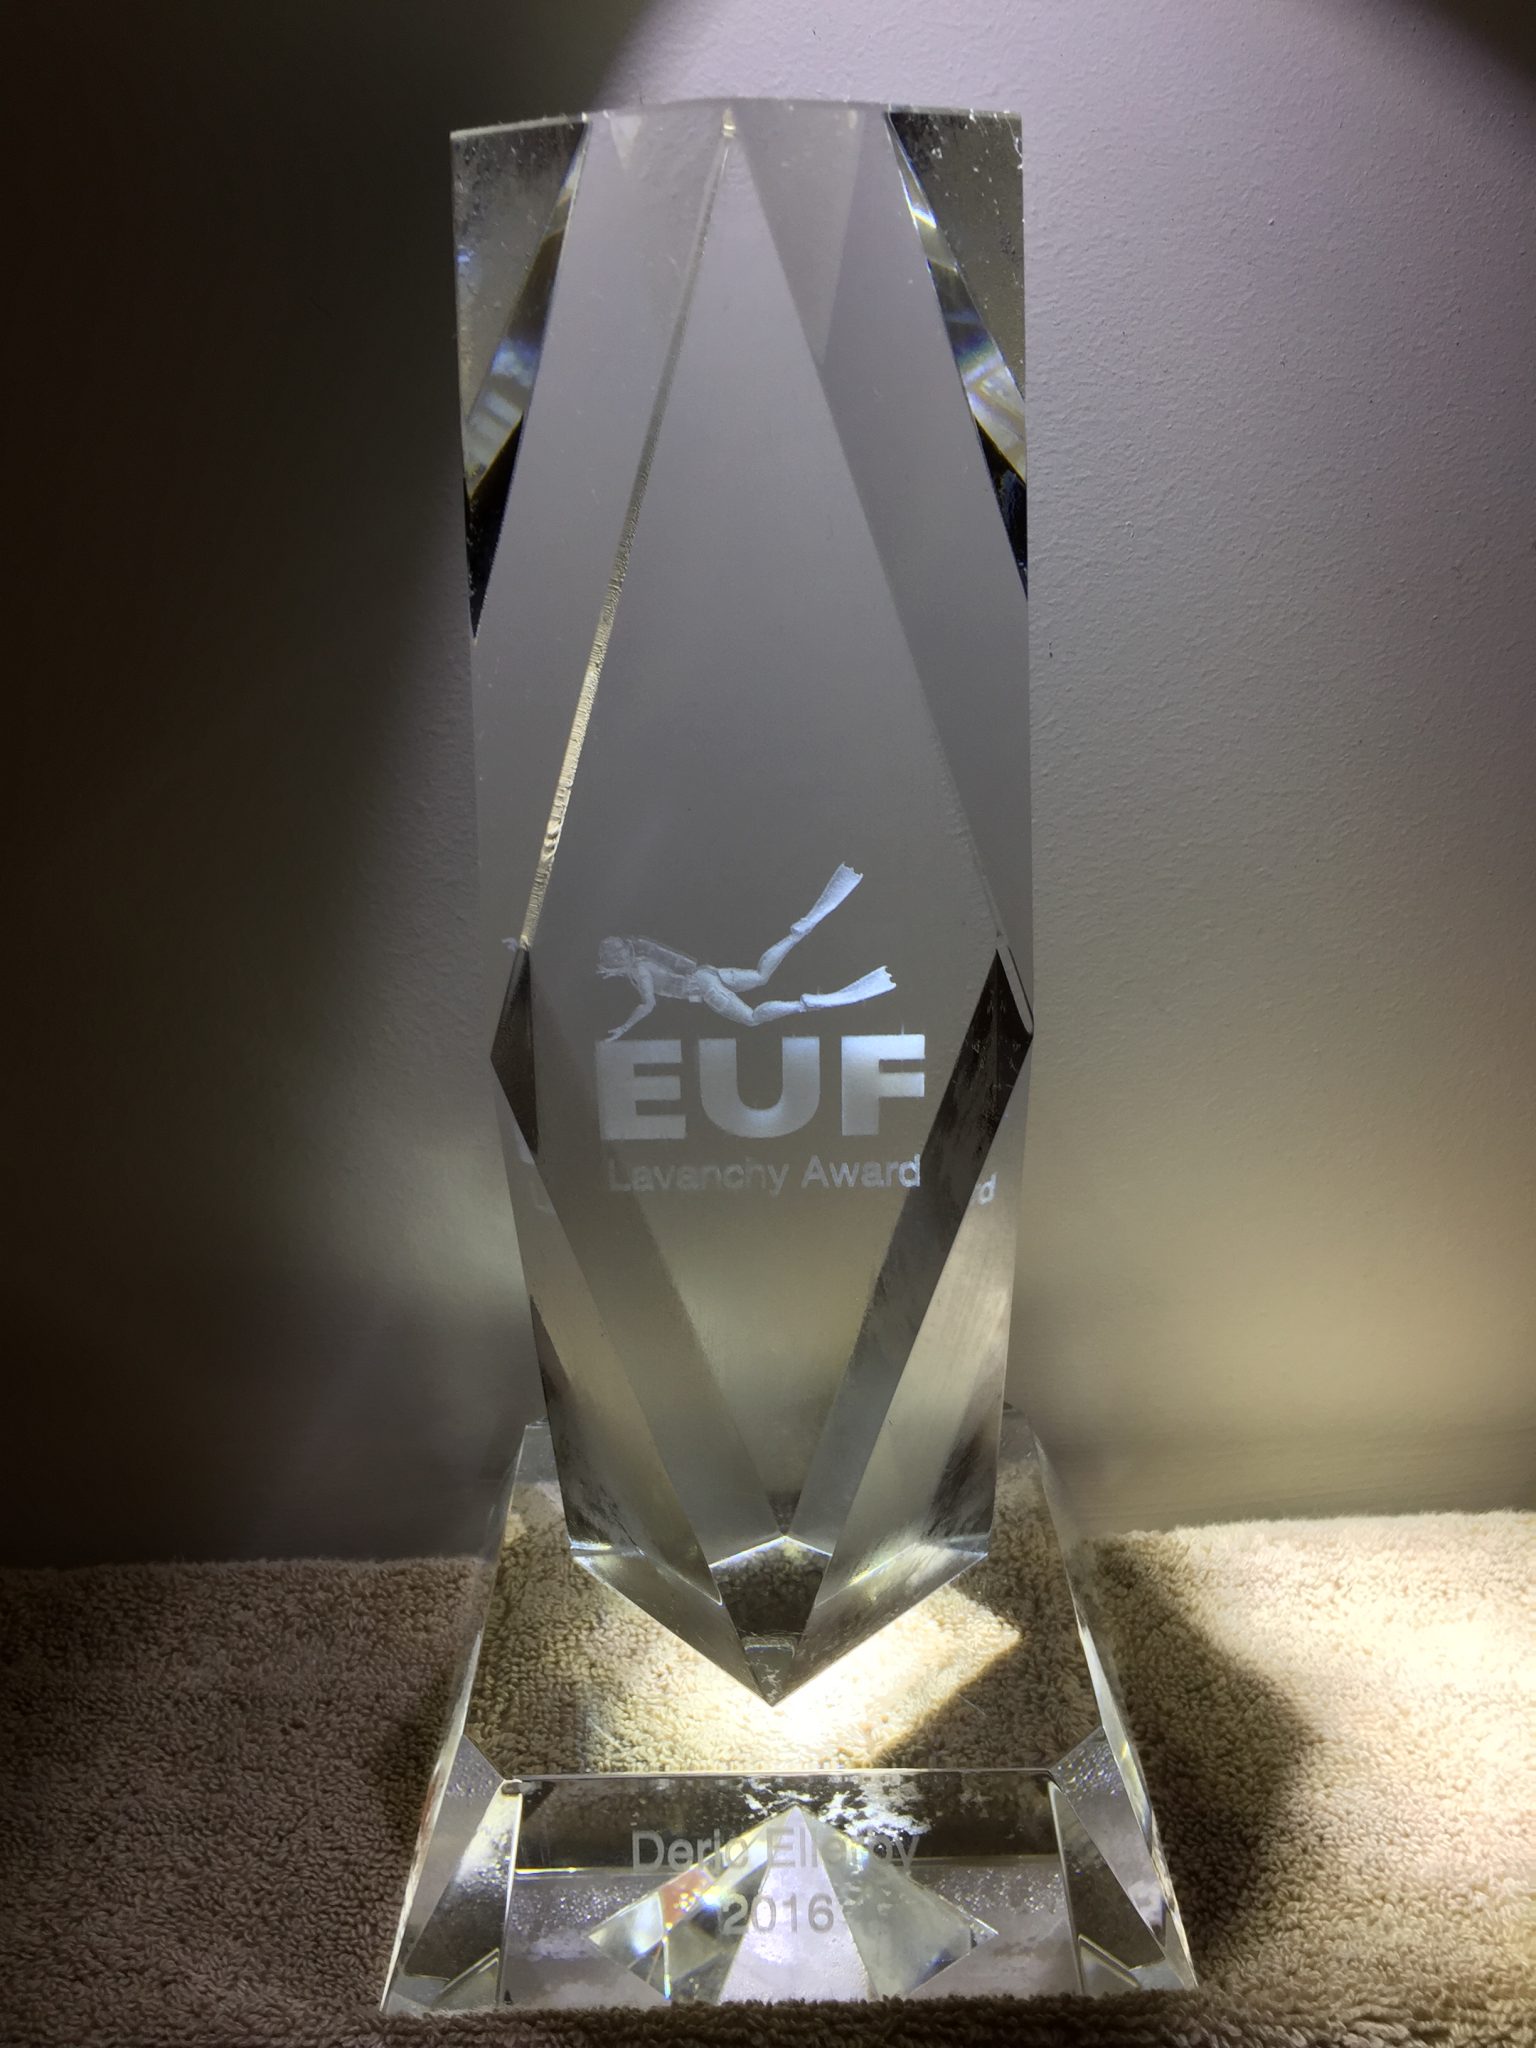 EUF Lavanchy Award